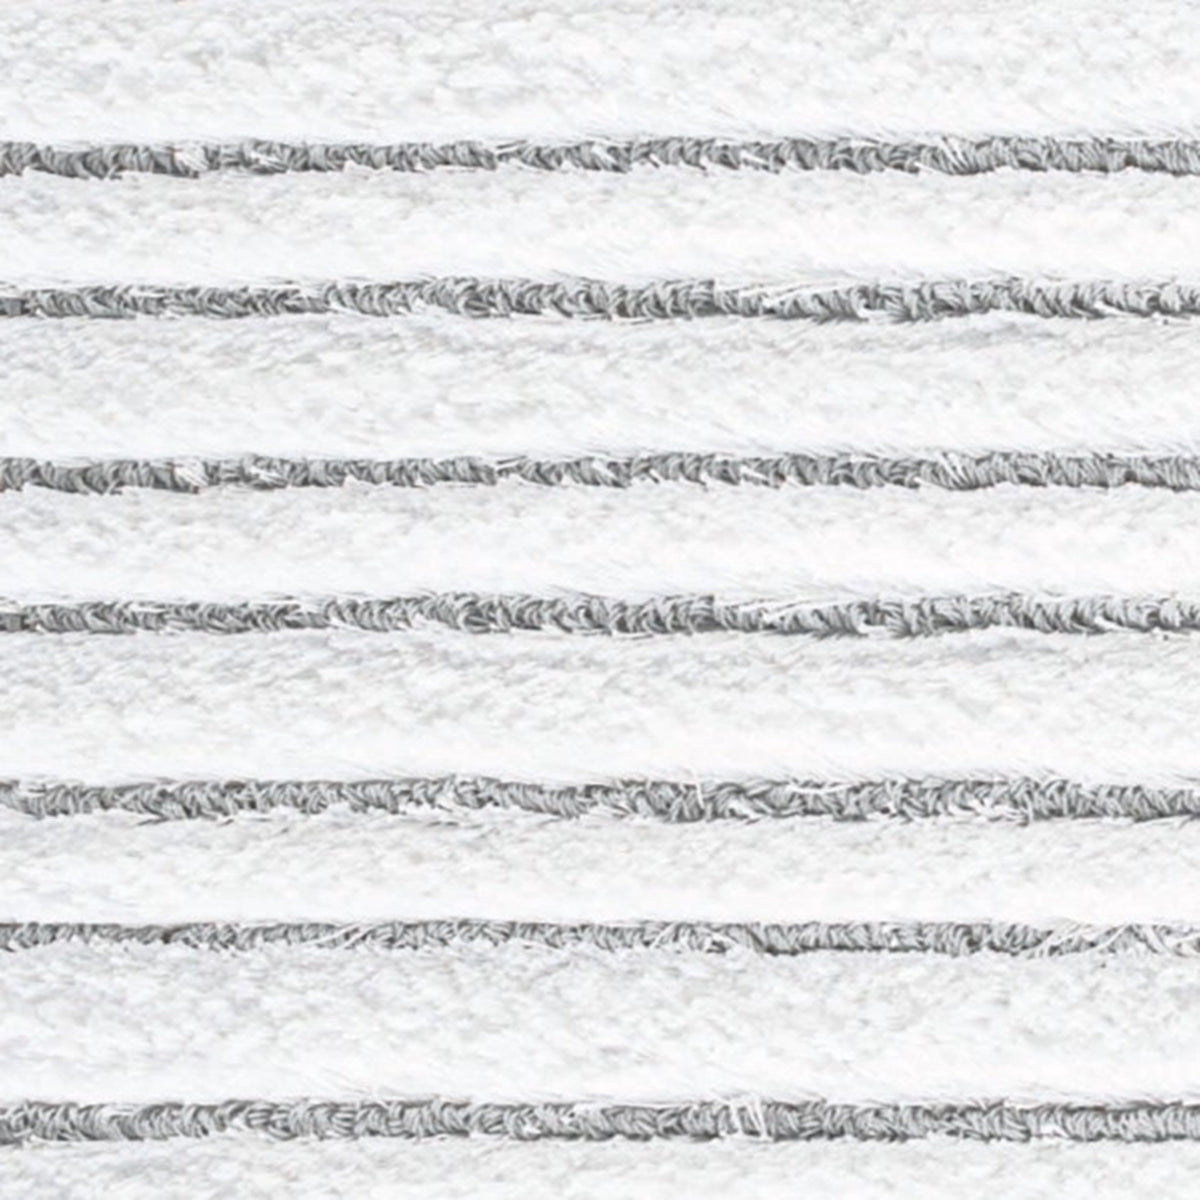 Swatch Sample of Graccioza Taormina Bath Towels in Color Silver